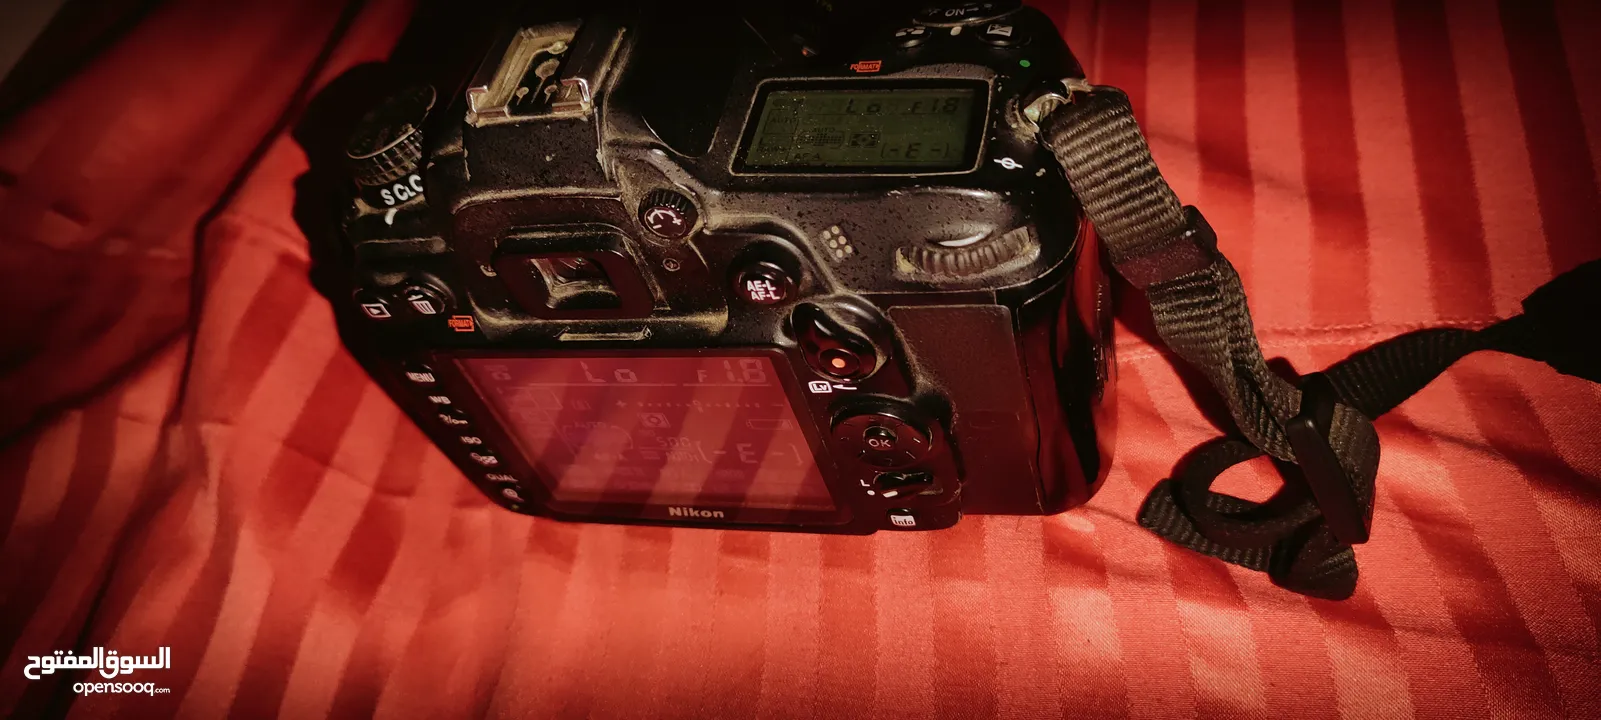 Nikon D7000 with 50mm 1.8F lens مع البطارية والشاحن وعدسه شبه جديده